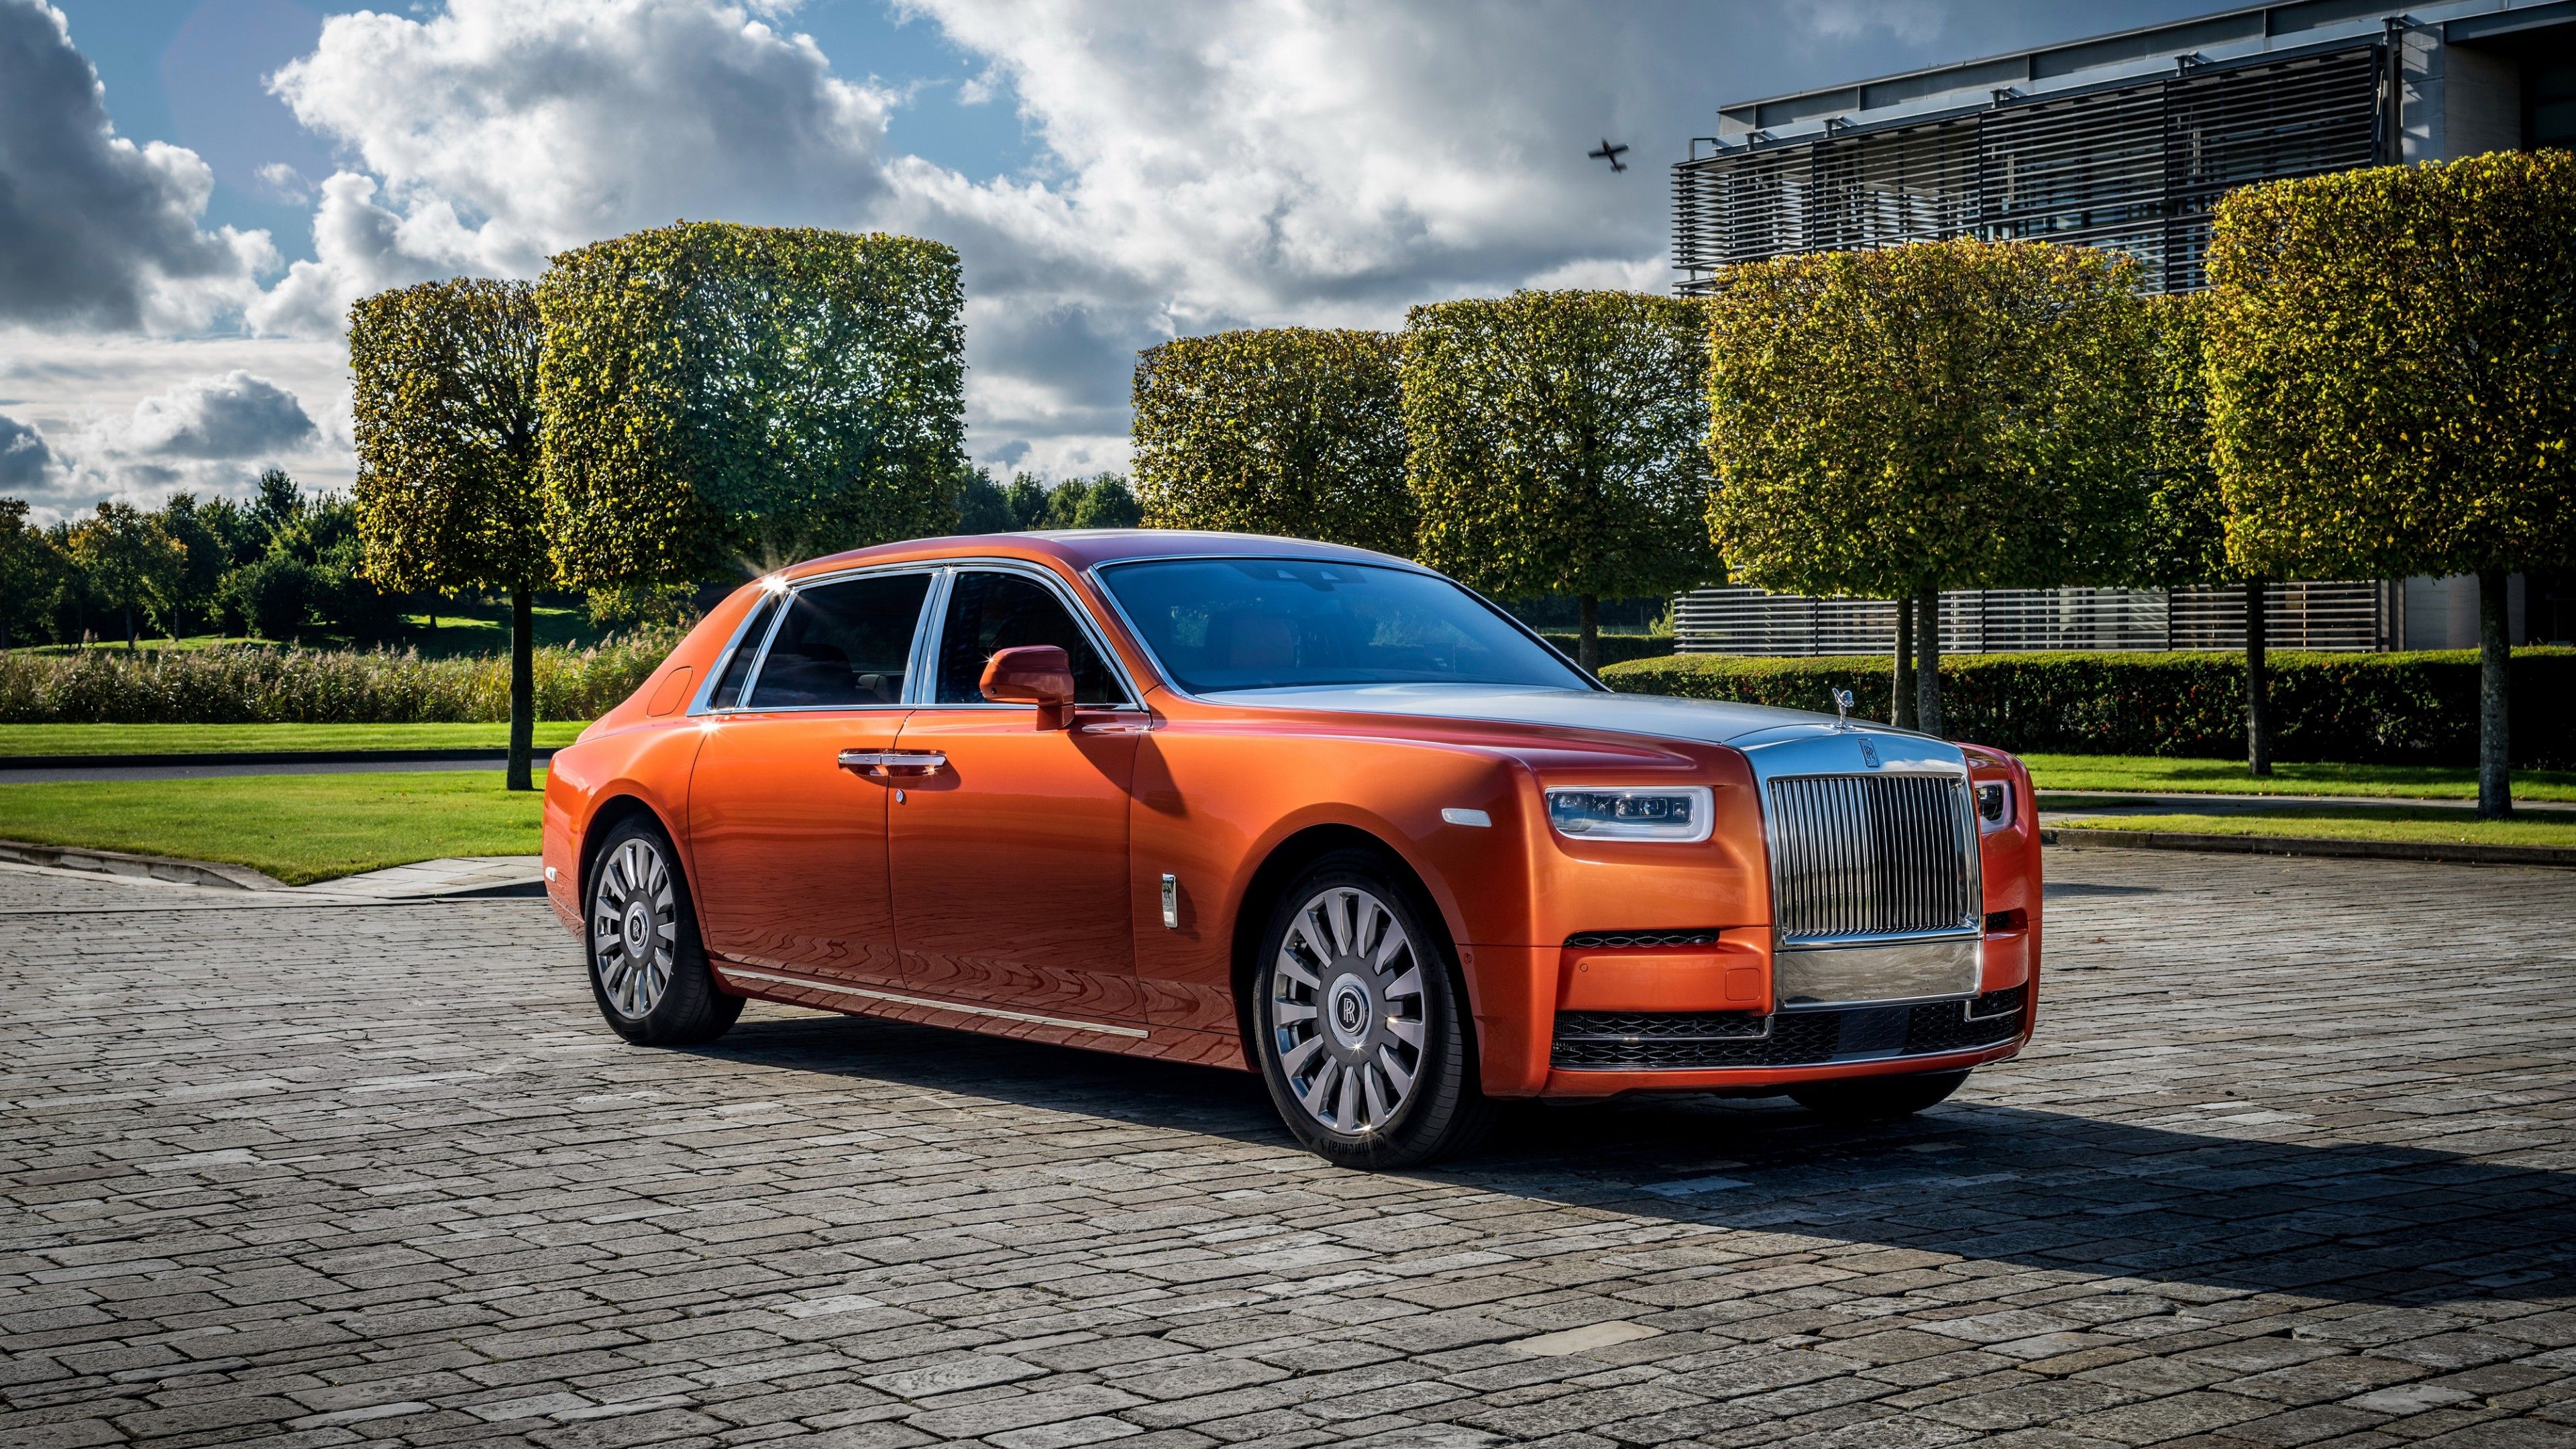 Download 3840x2160 Rolls Royce Phantom, Orange, Side View, Luxury